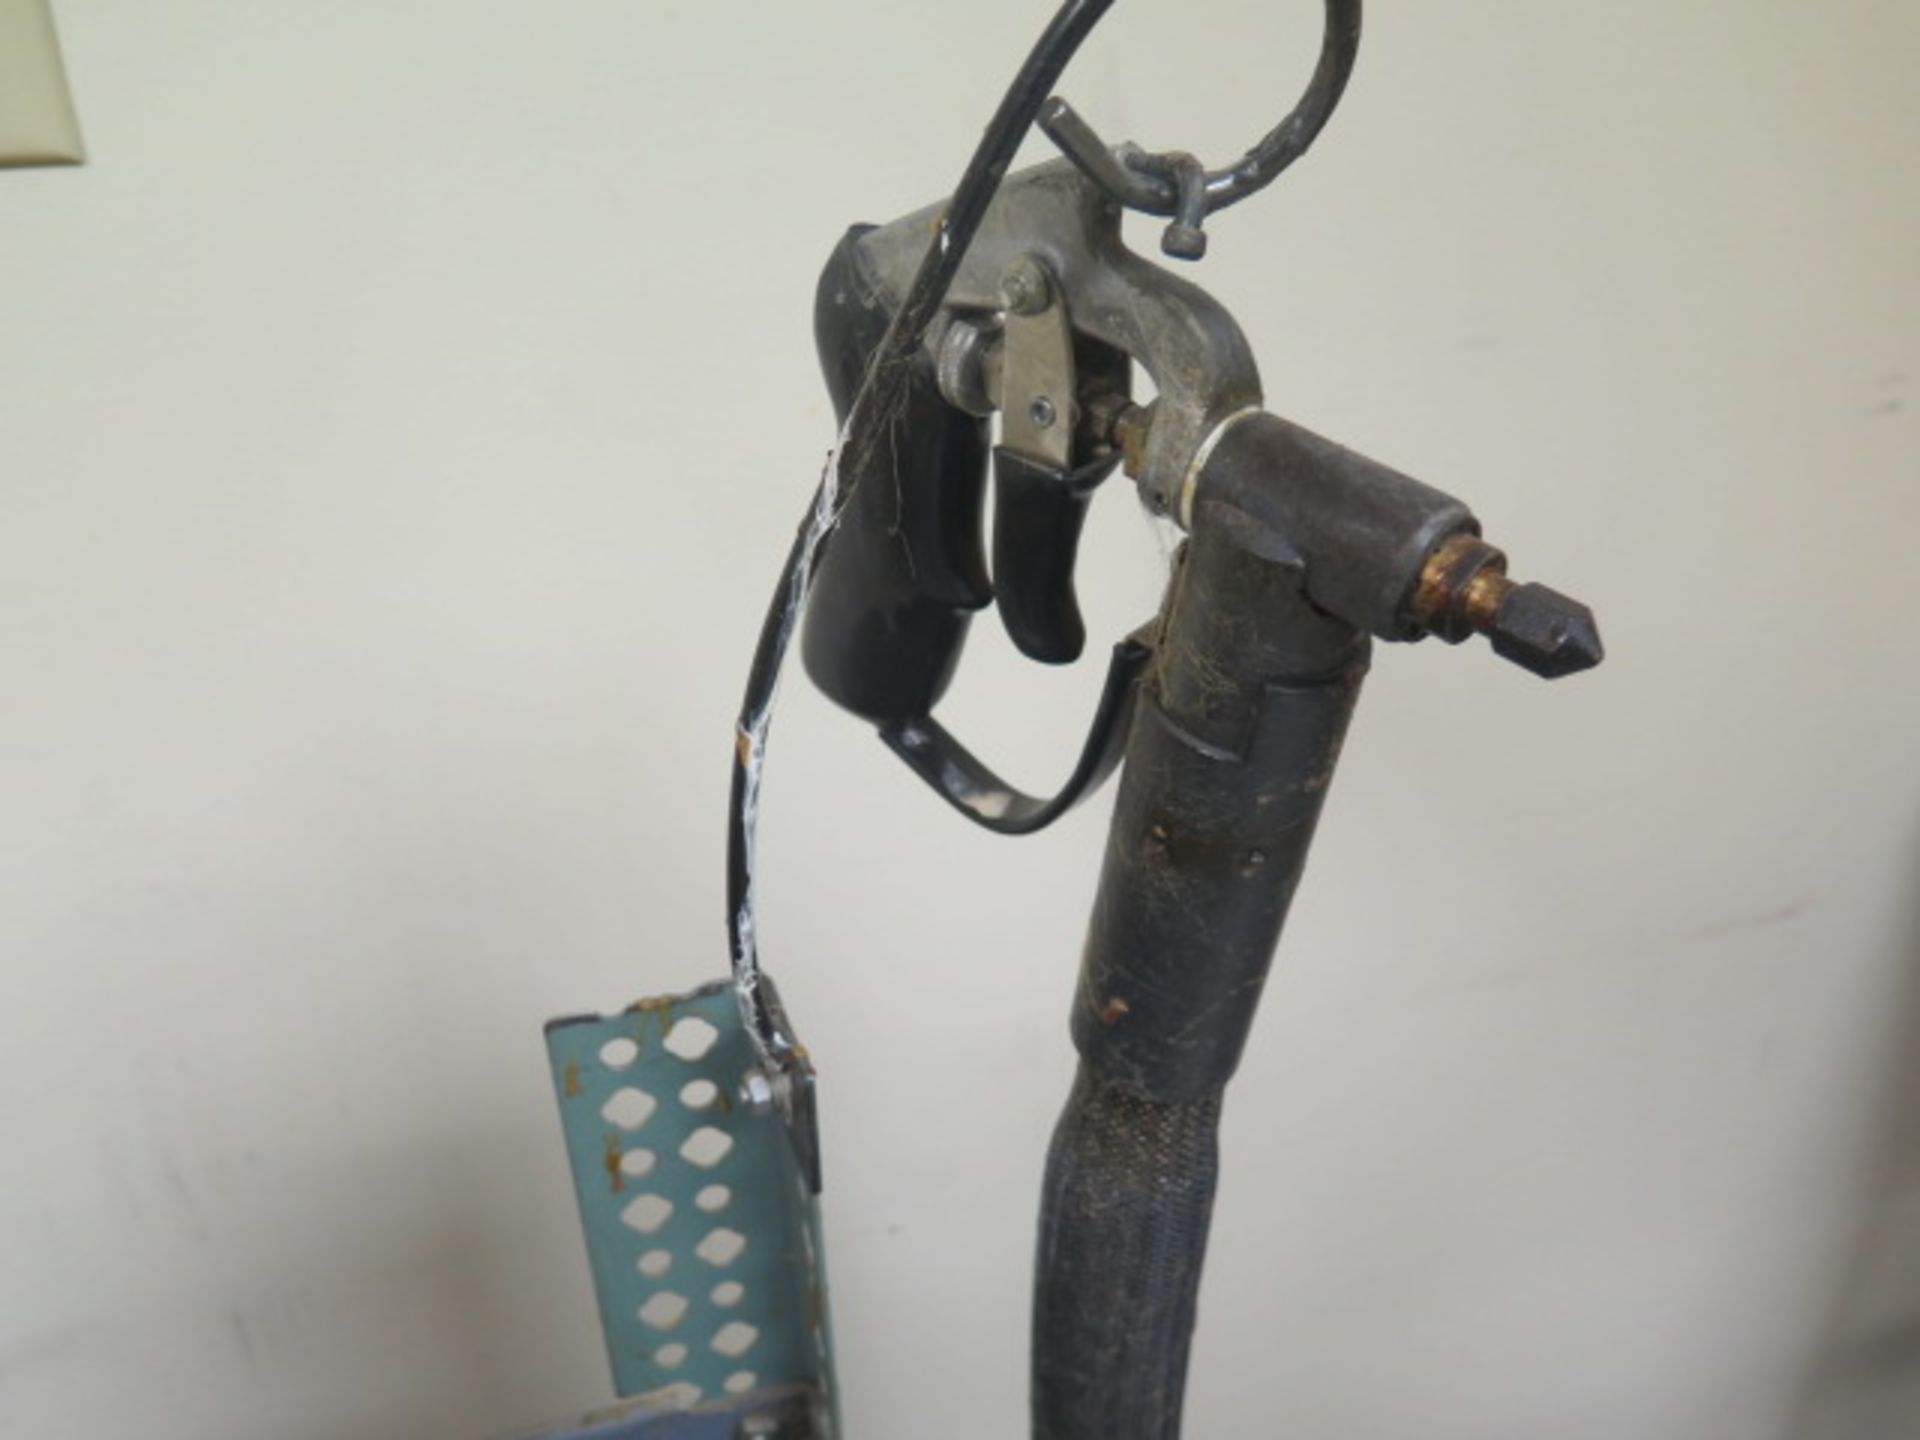 Slautterback “Little Squirt” Hot Glue Dispenser and Cart - Image 5 of 6